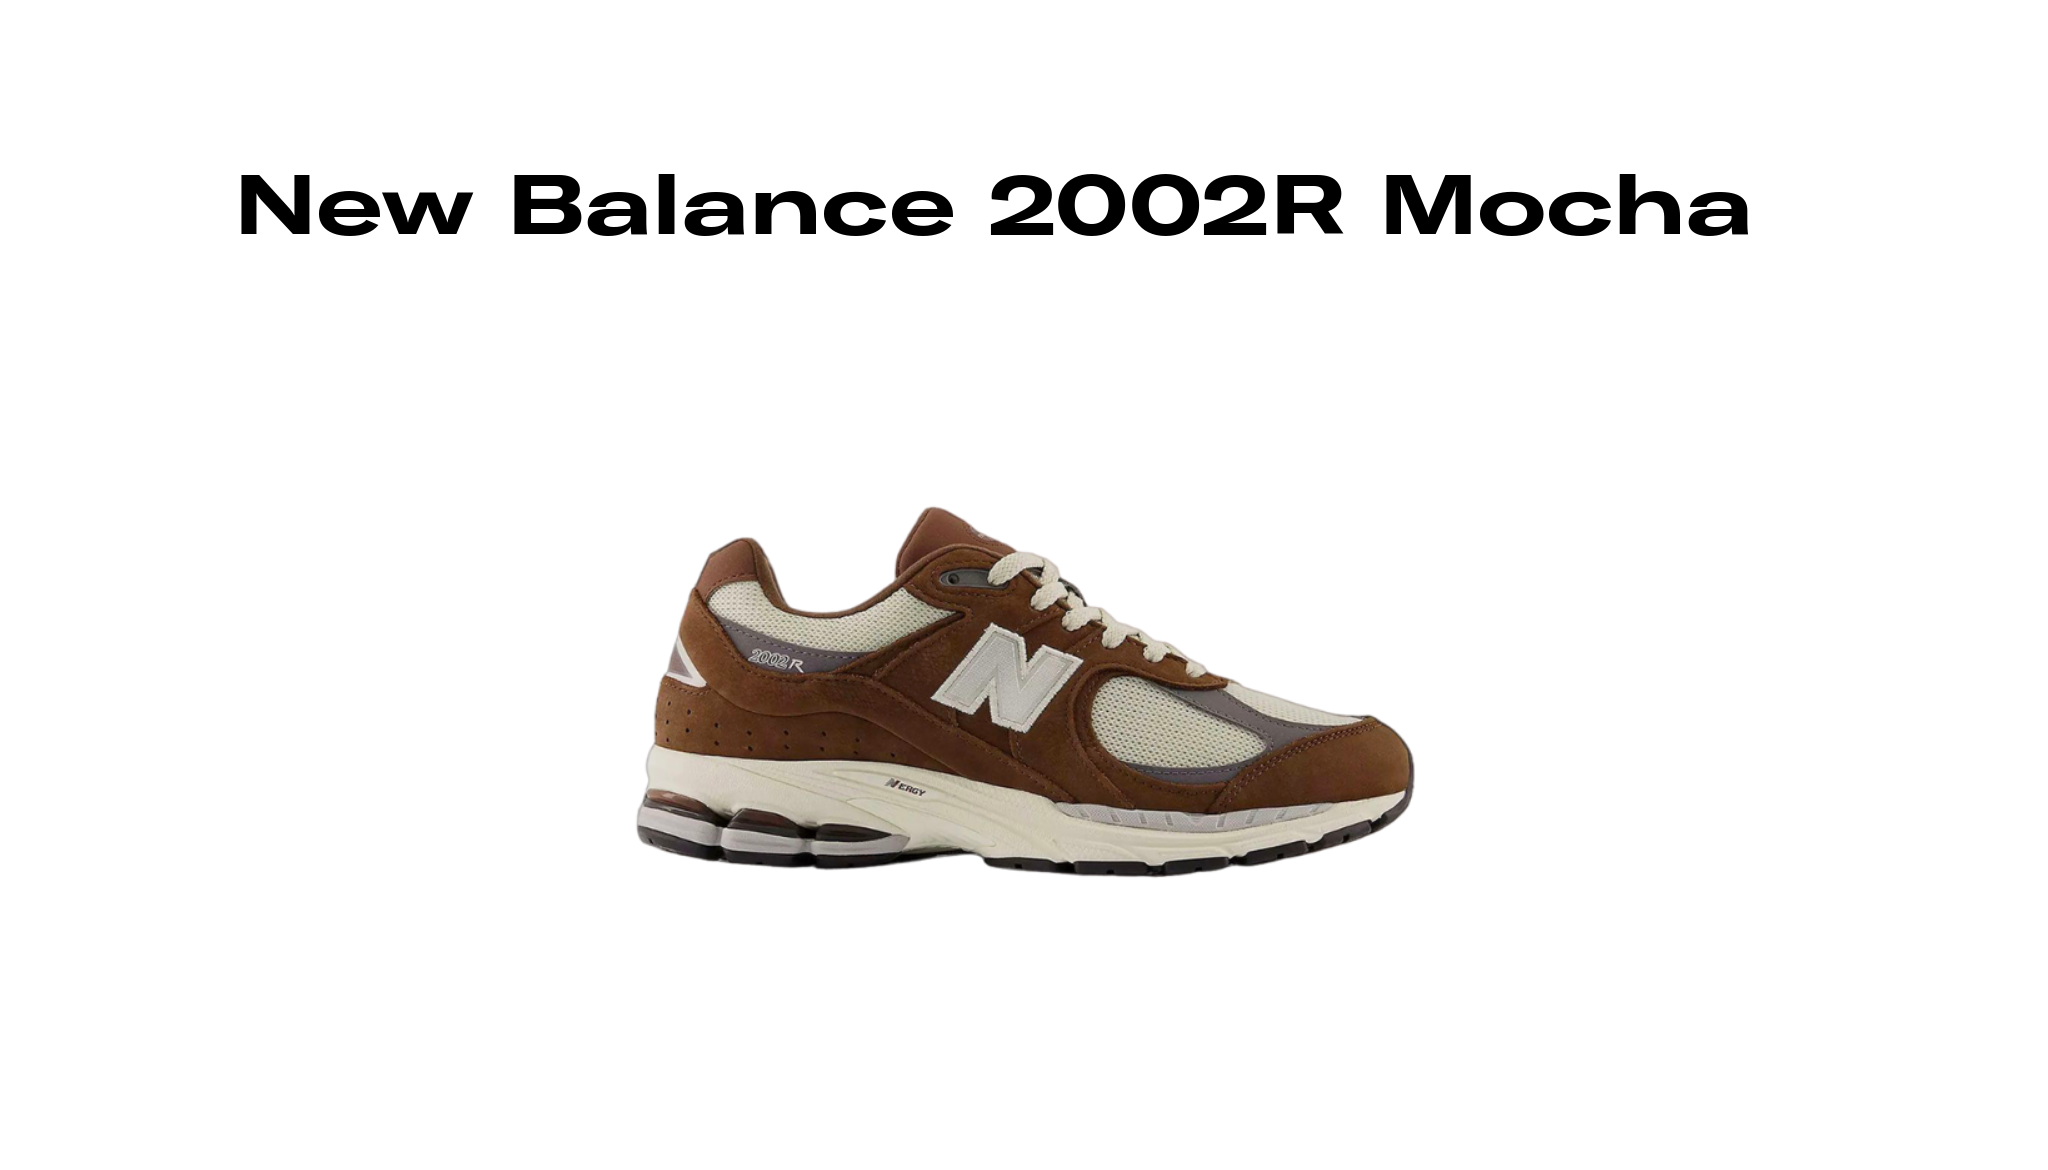 New Balance 2002R Mocha, Raffles and Release Date | Sole Retriever